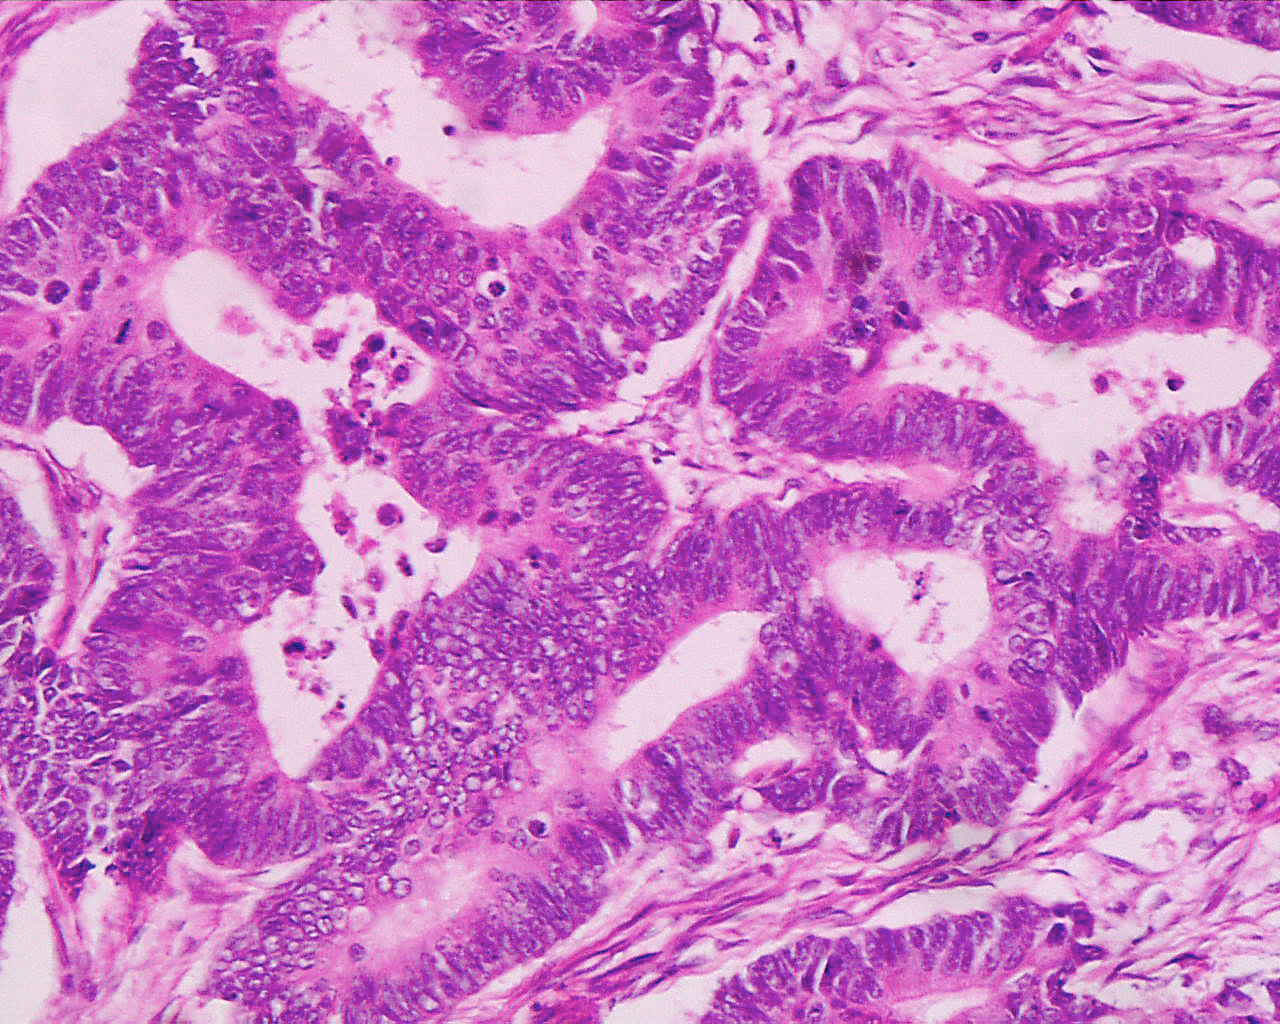 adenocarcinoma-moderadamente-diferenciado-invasivo